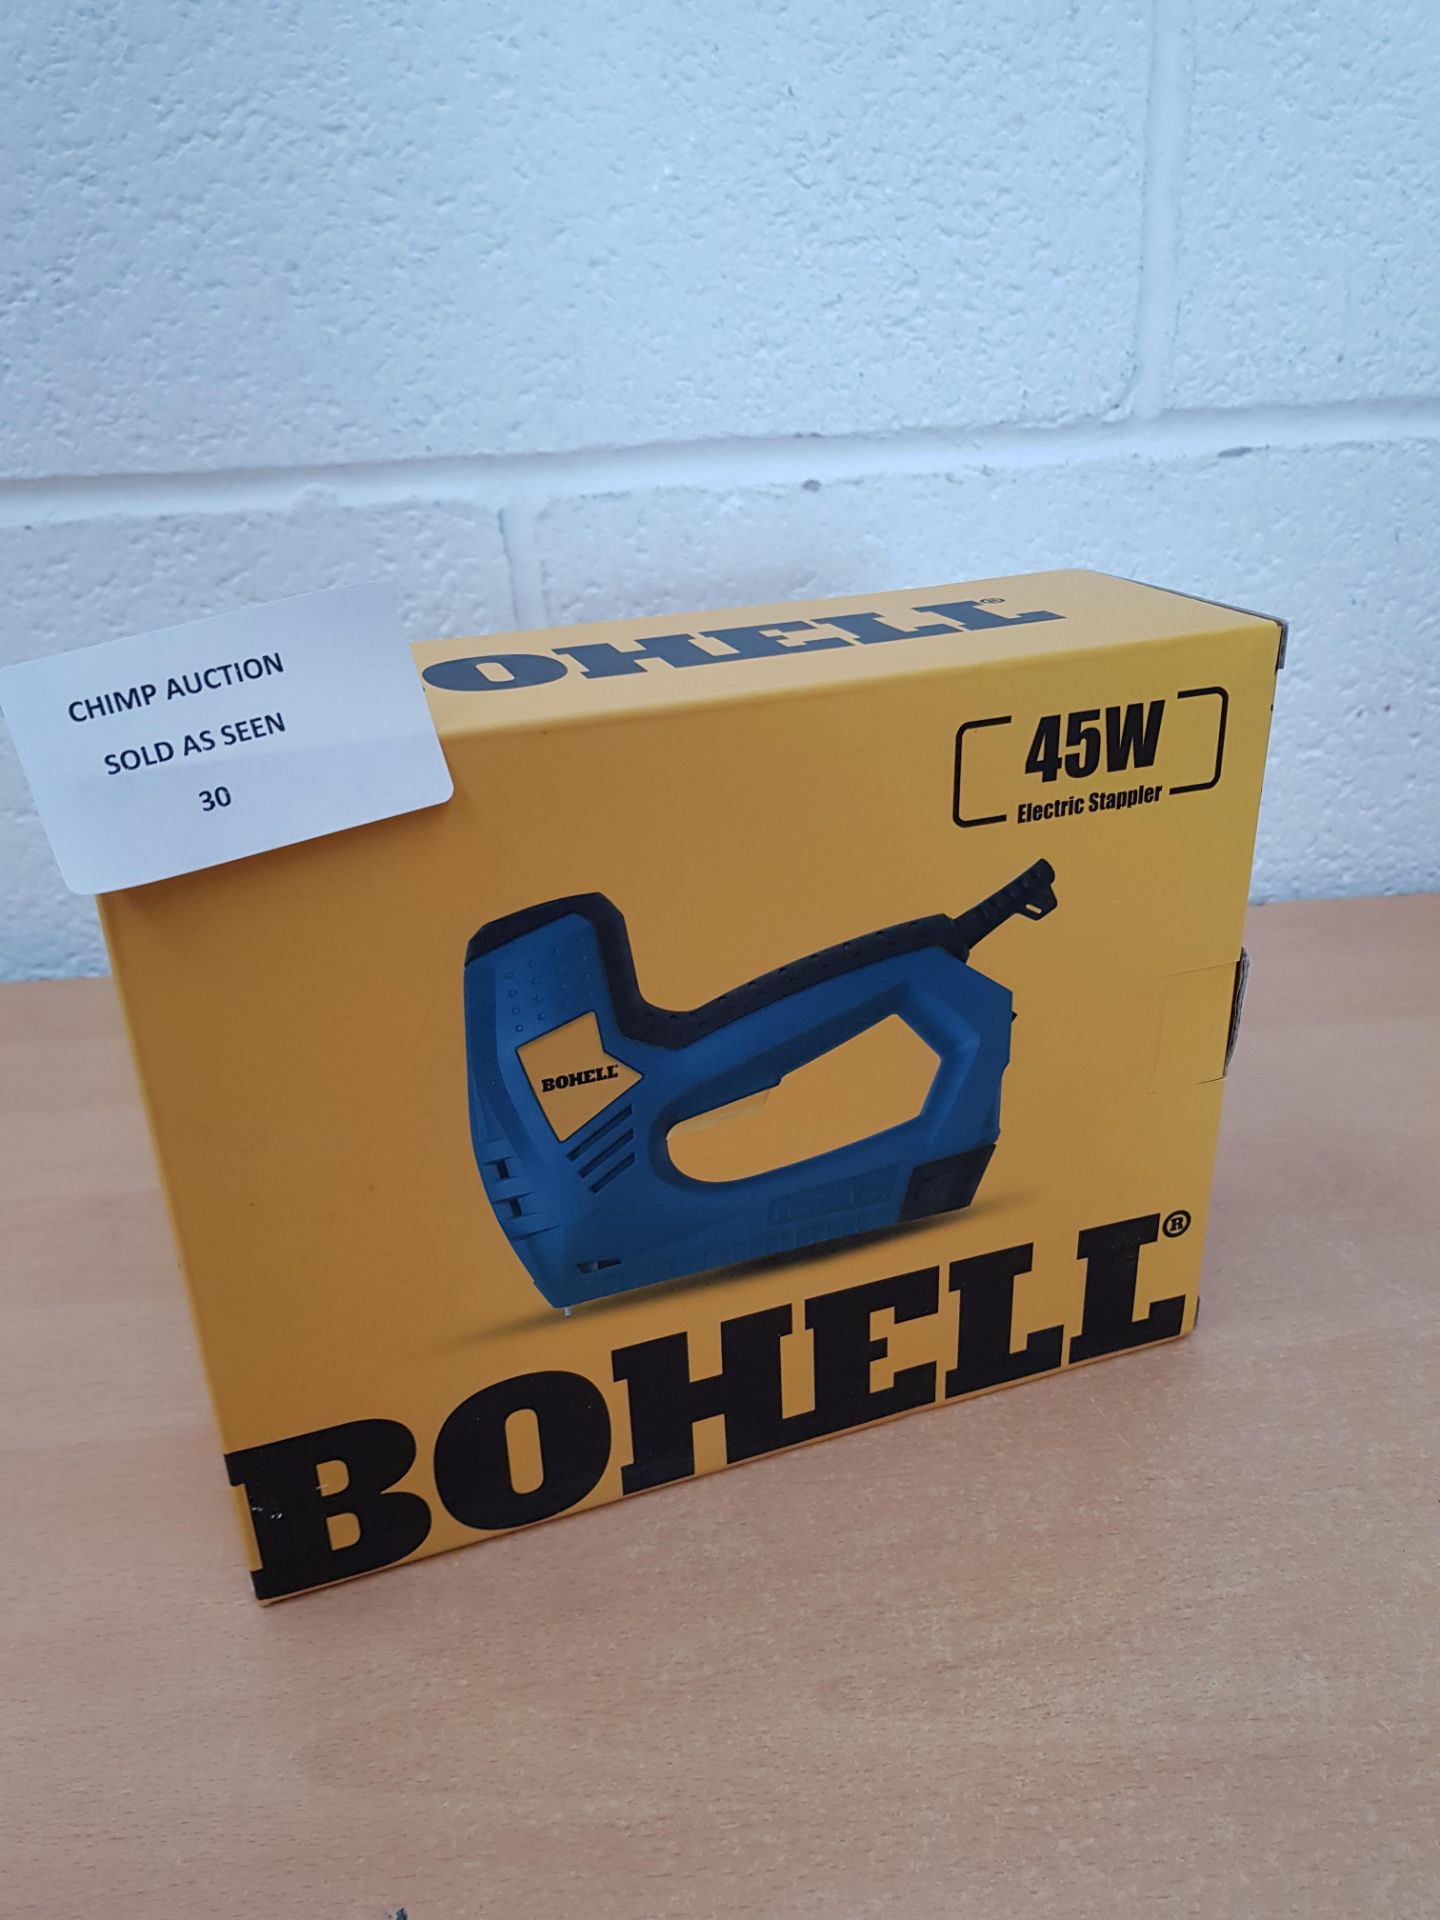 Bohell 45W Electric Stappler